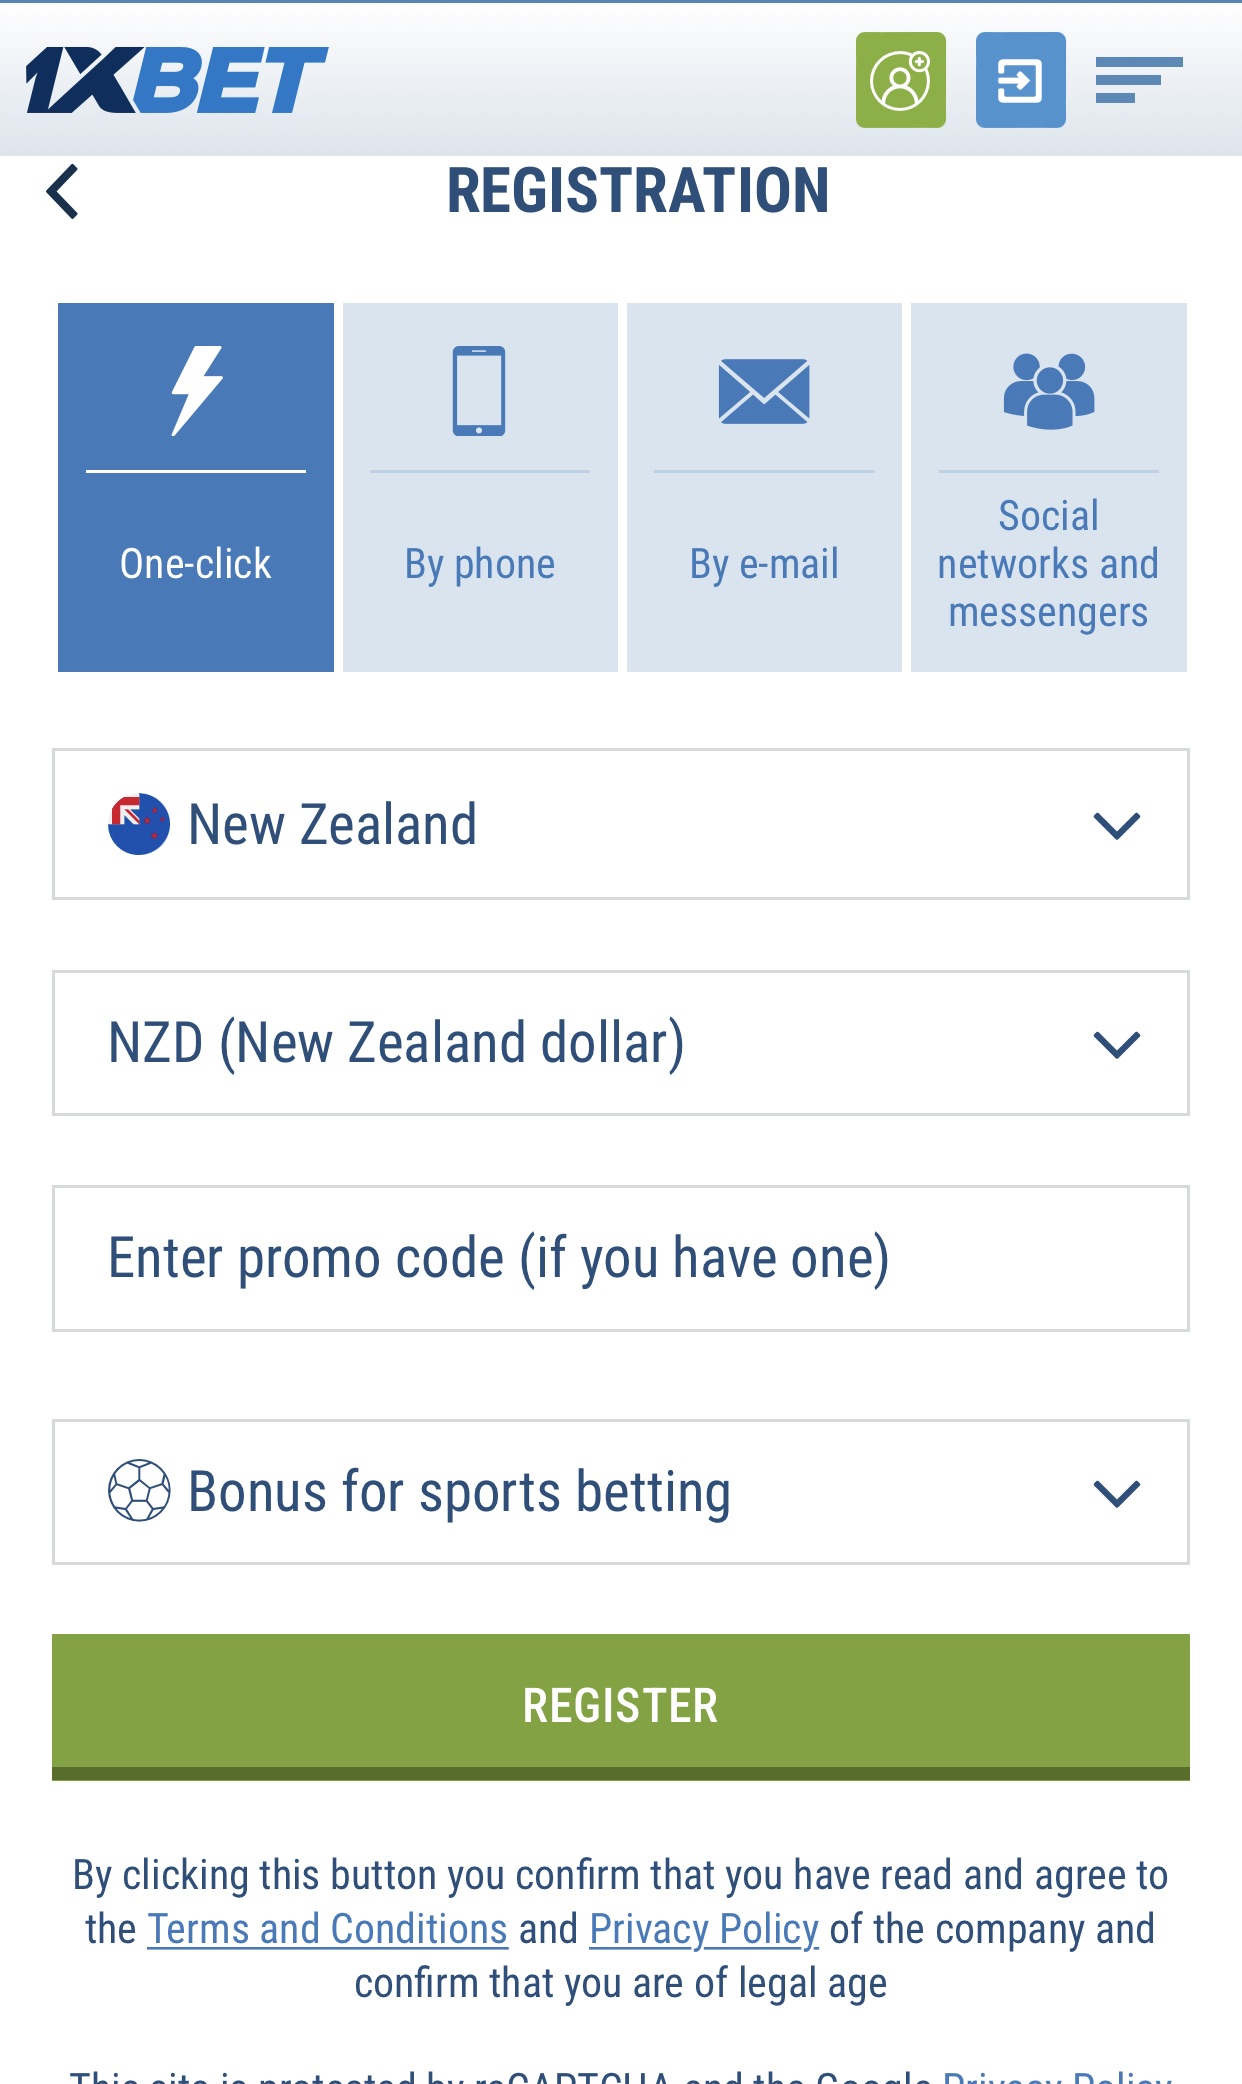 Fast reg mobile app 1xbet in New Zealand